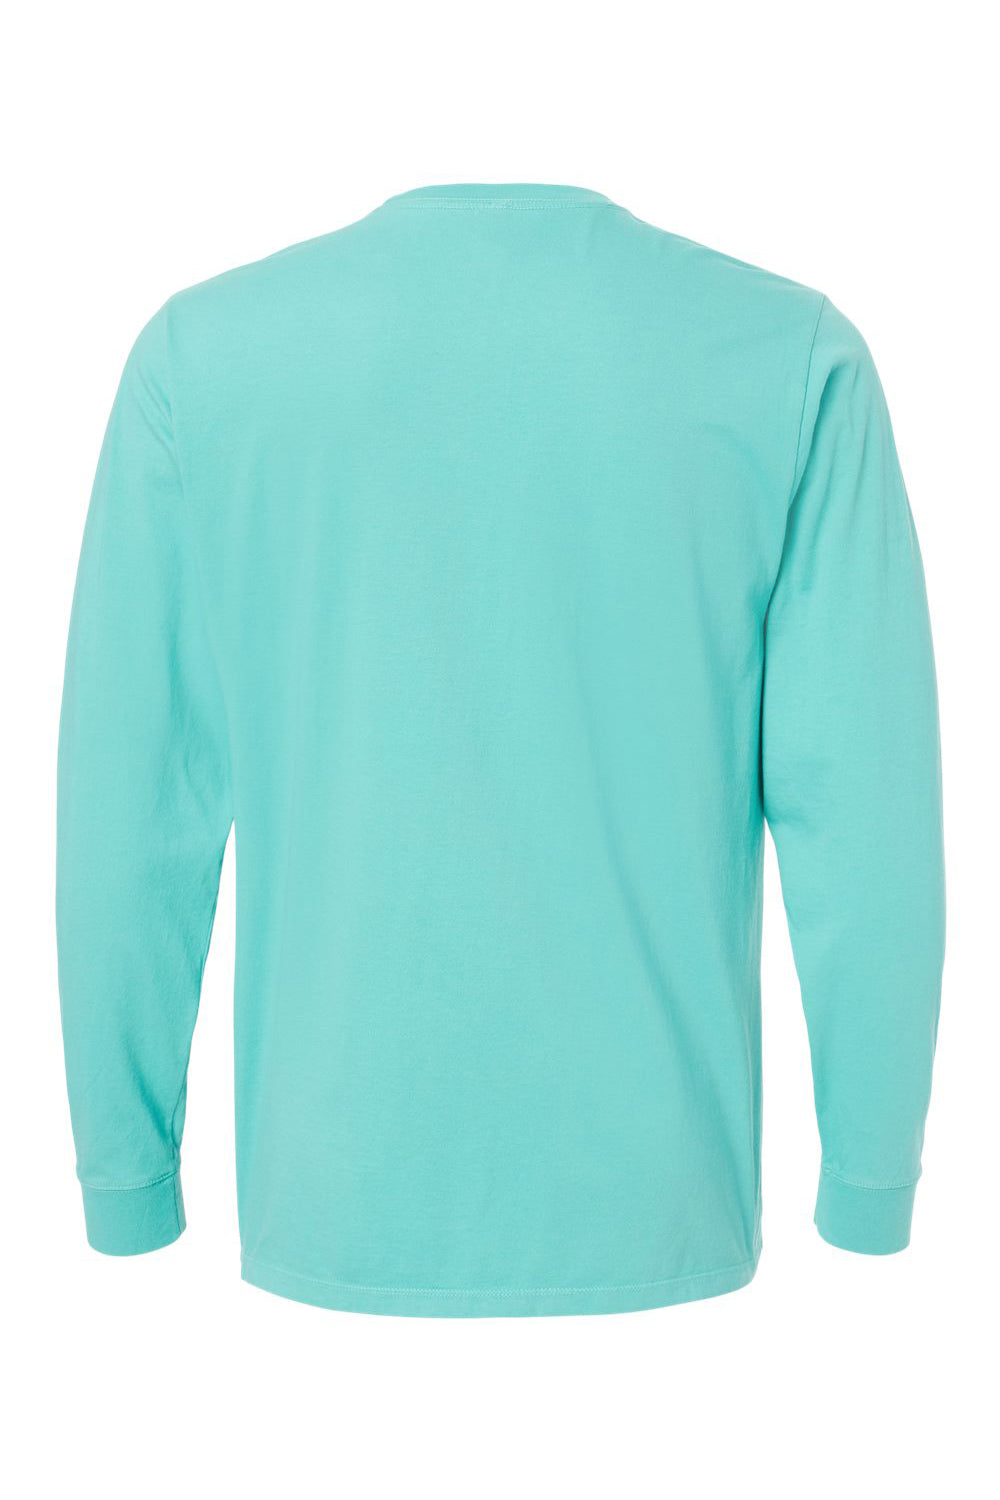 SoftShirts 420 Mens Organic Long Sleeve Crewneck T-Shirt Seaform Green Flat Back